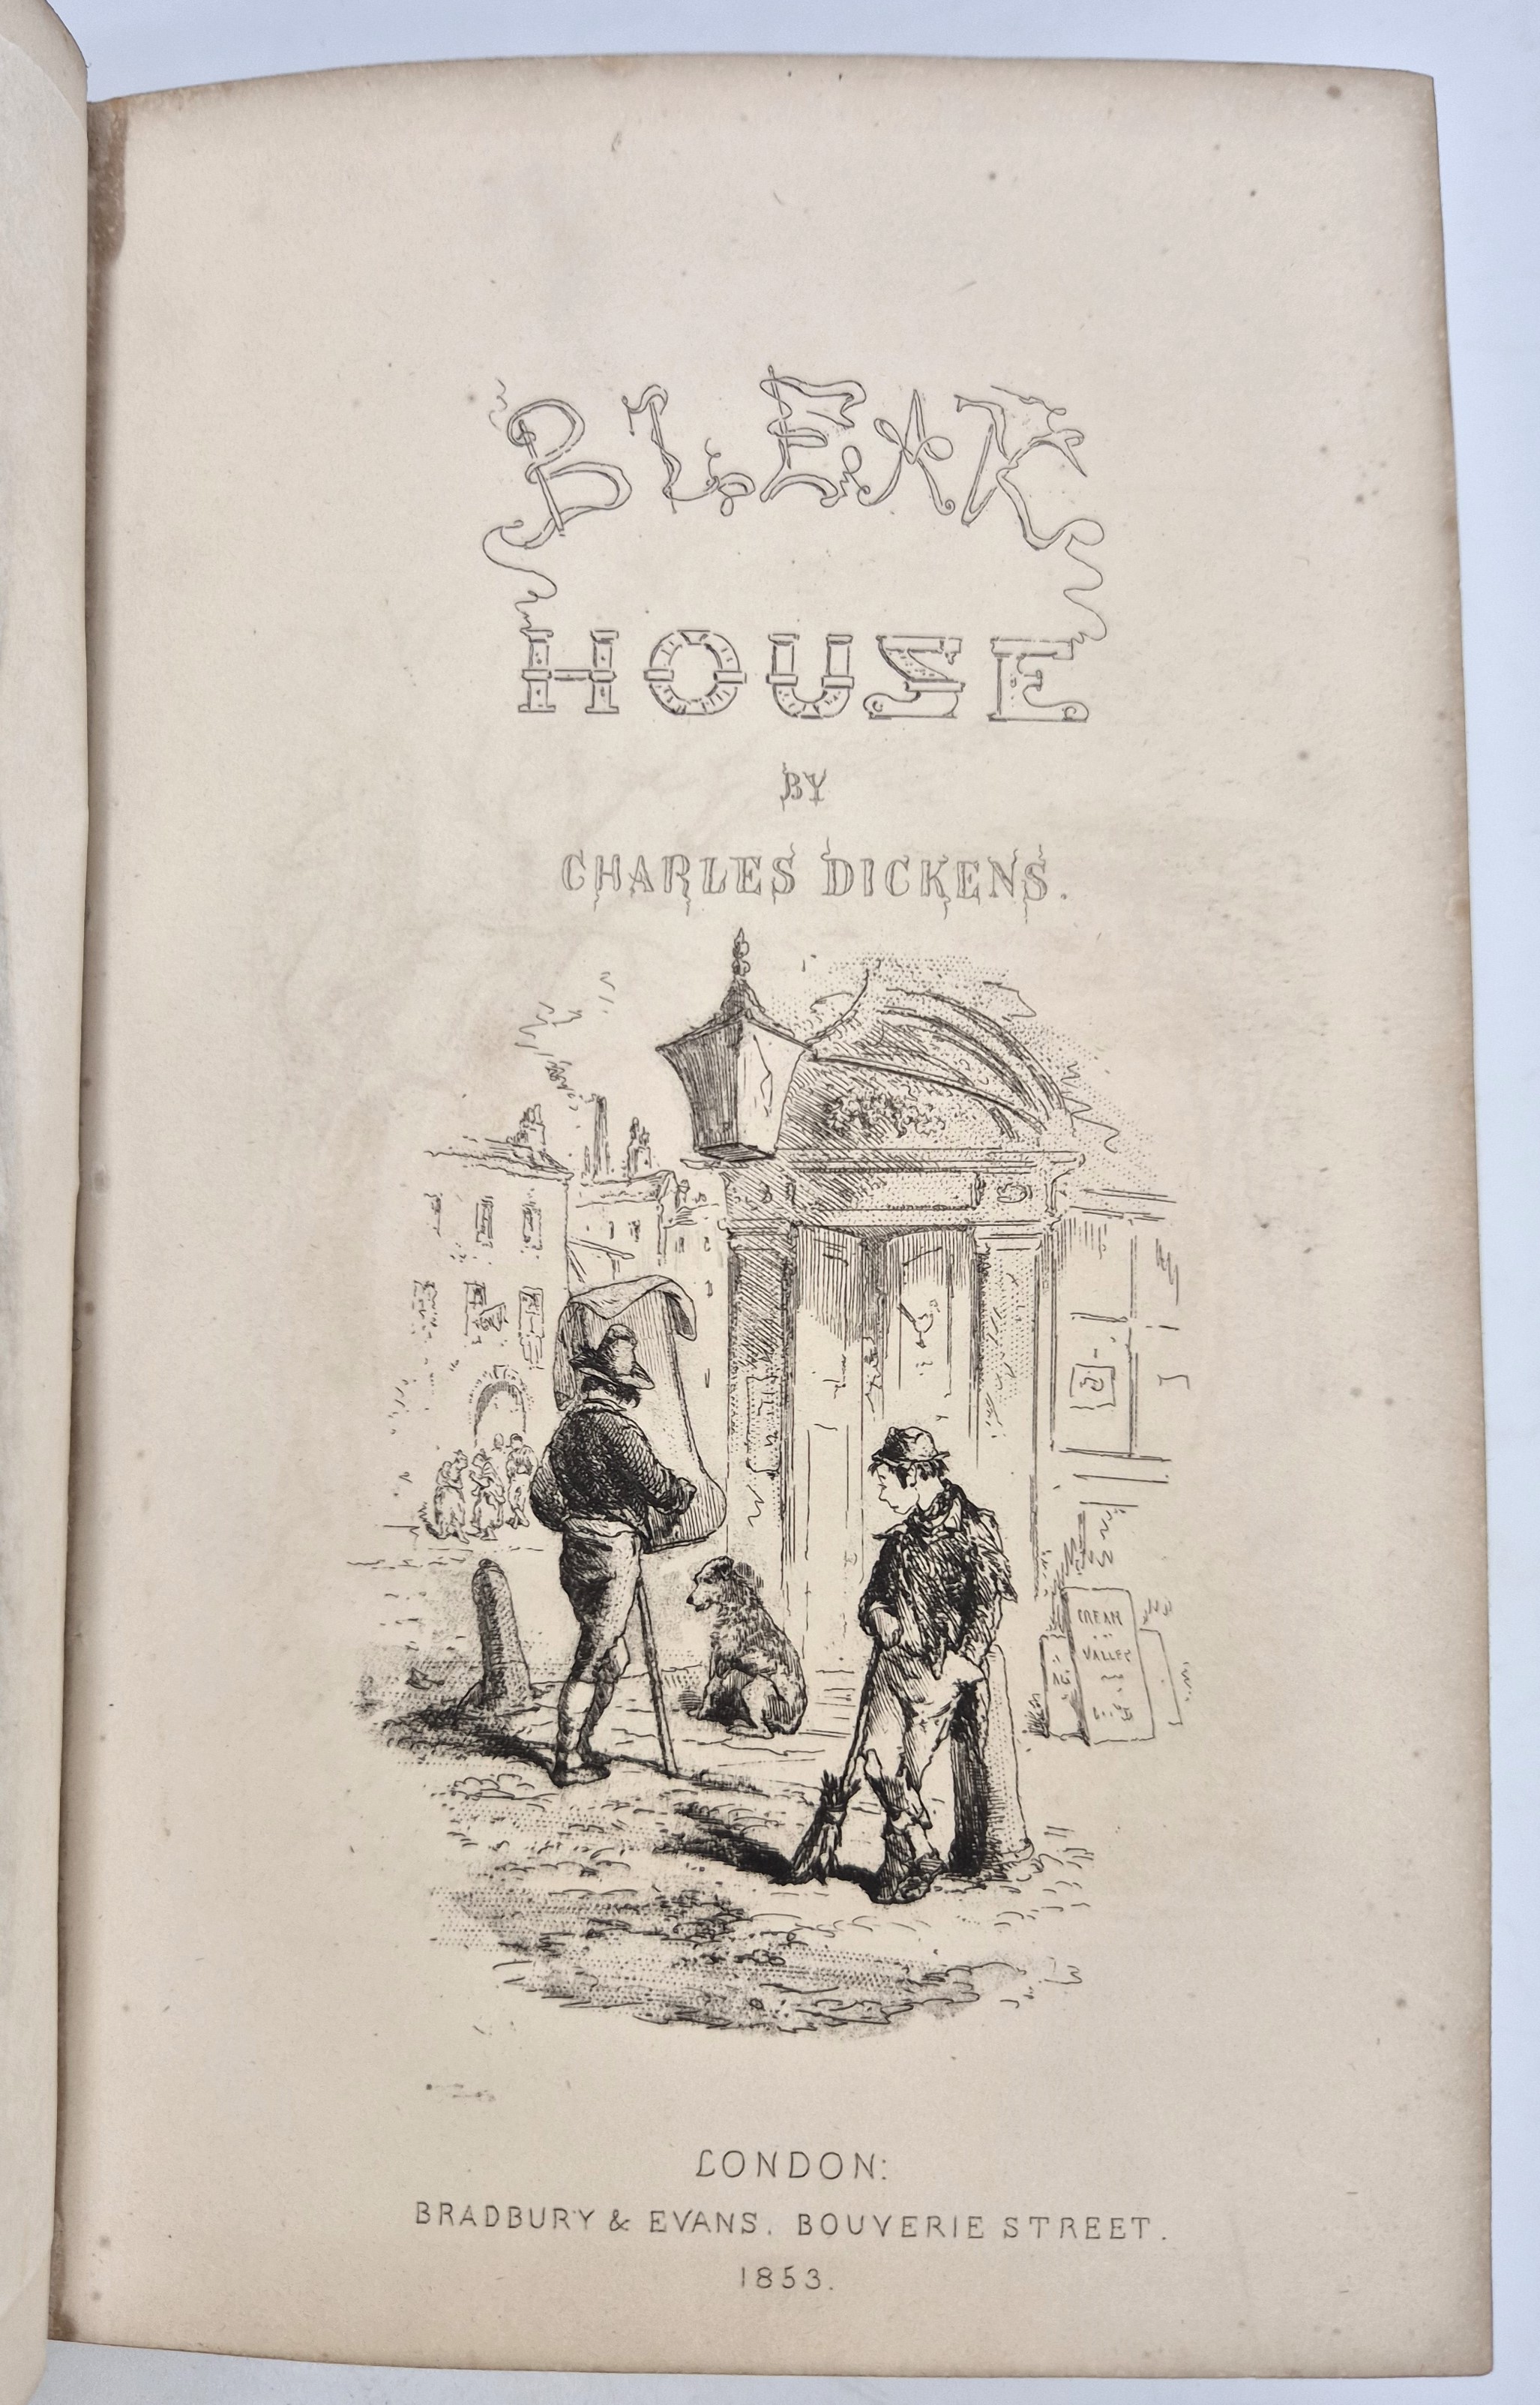 Dickens (Charles), "Bleak House", London; Bradbury & Evans, 1853, 1st edition, 8vo, illustrations by - Image 2 of 3